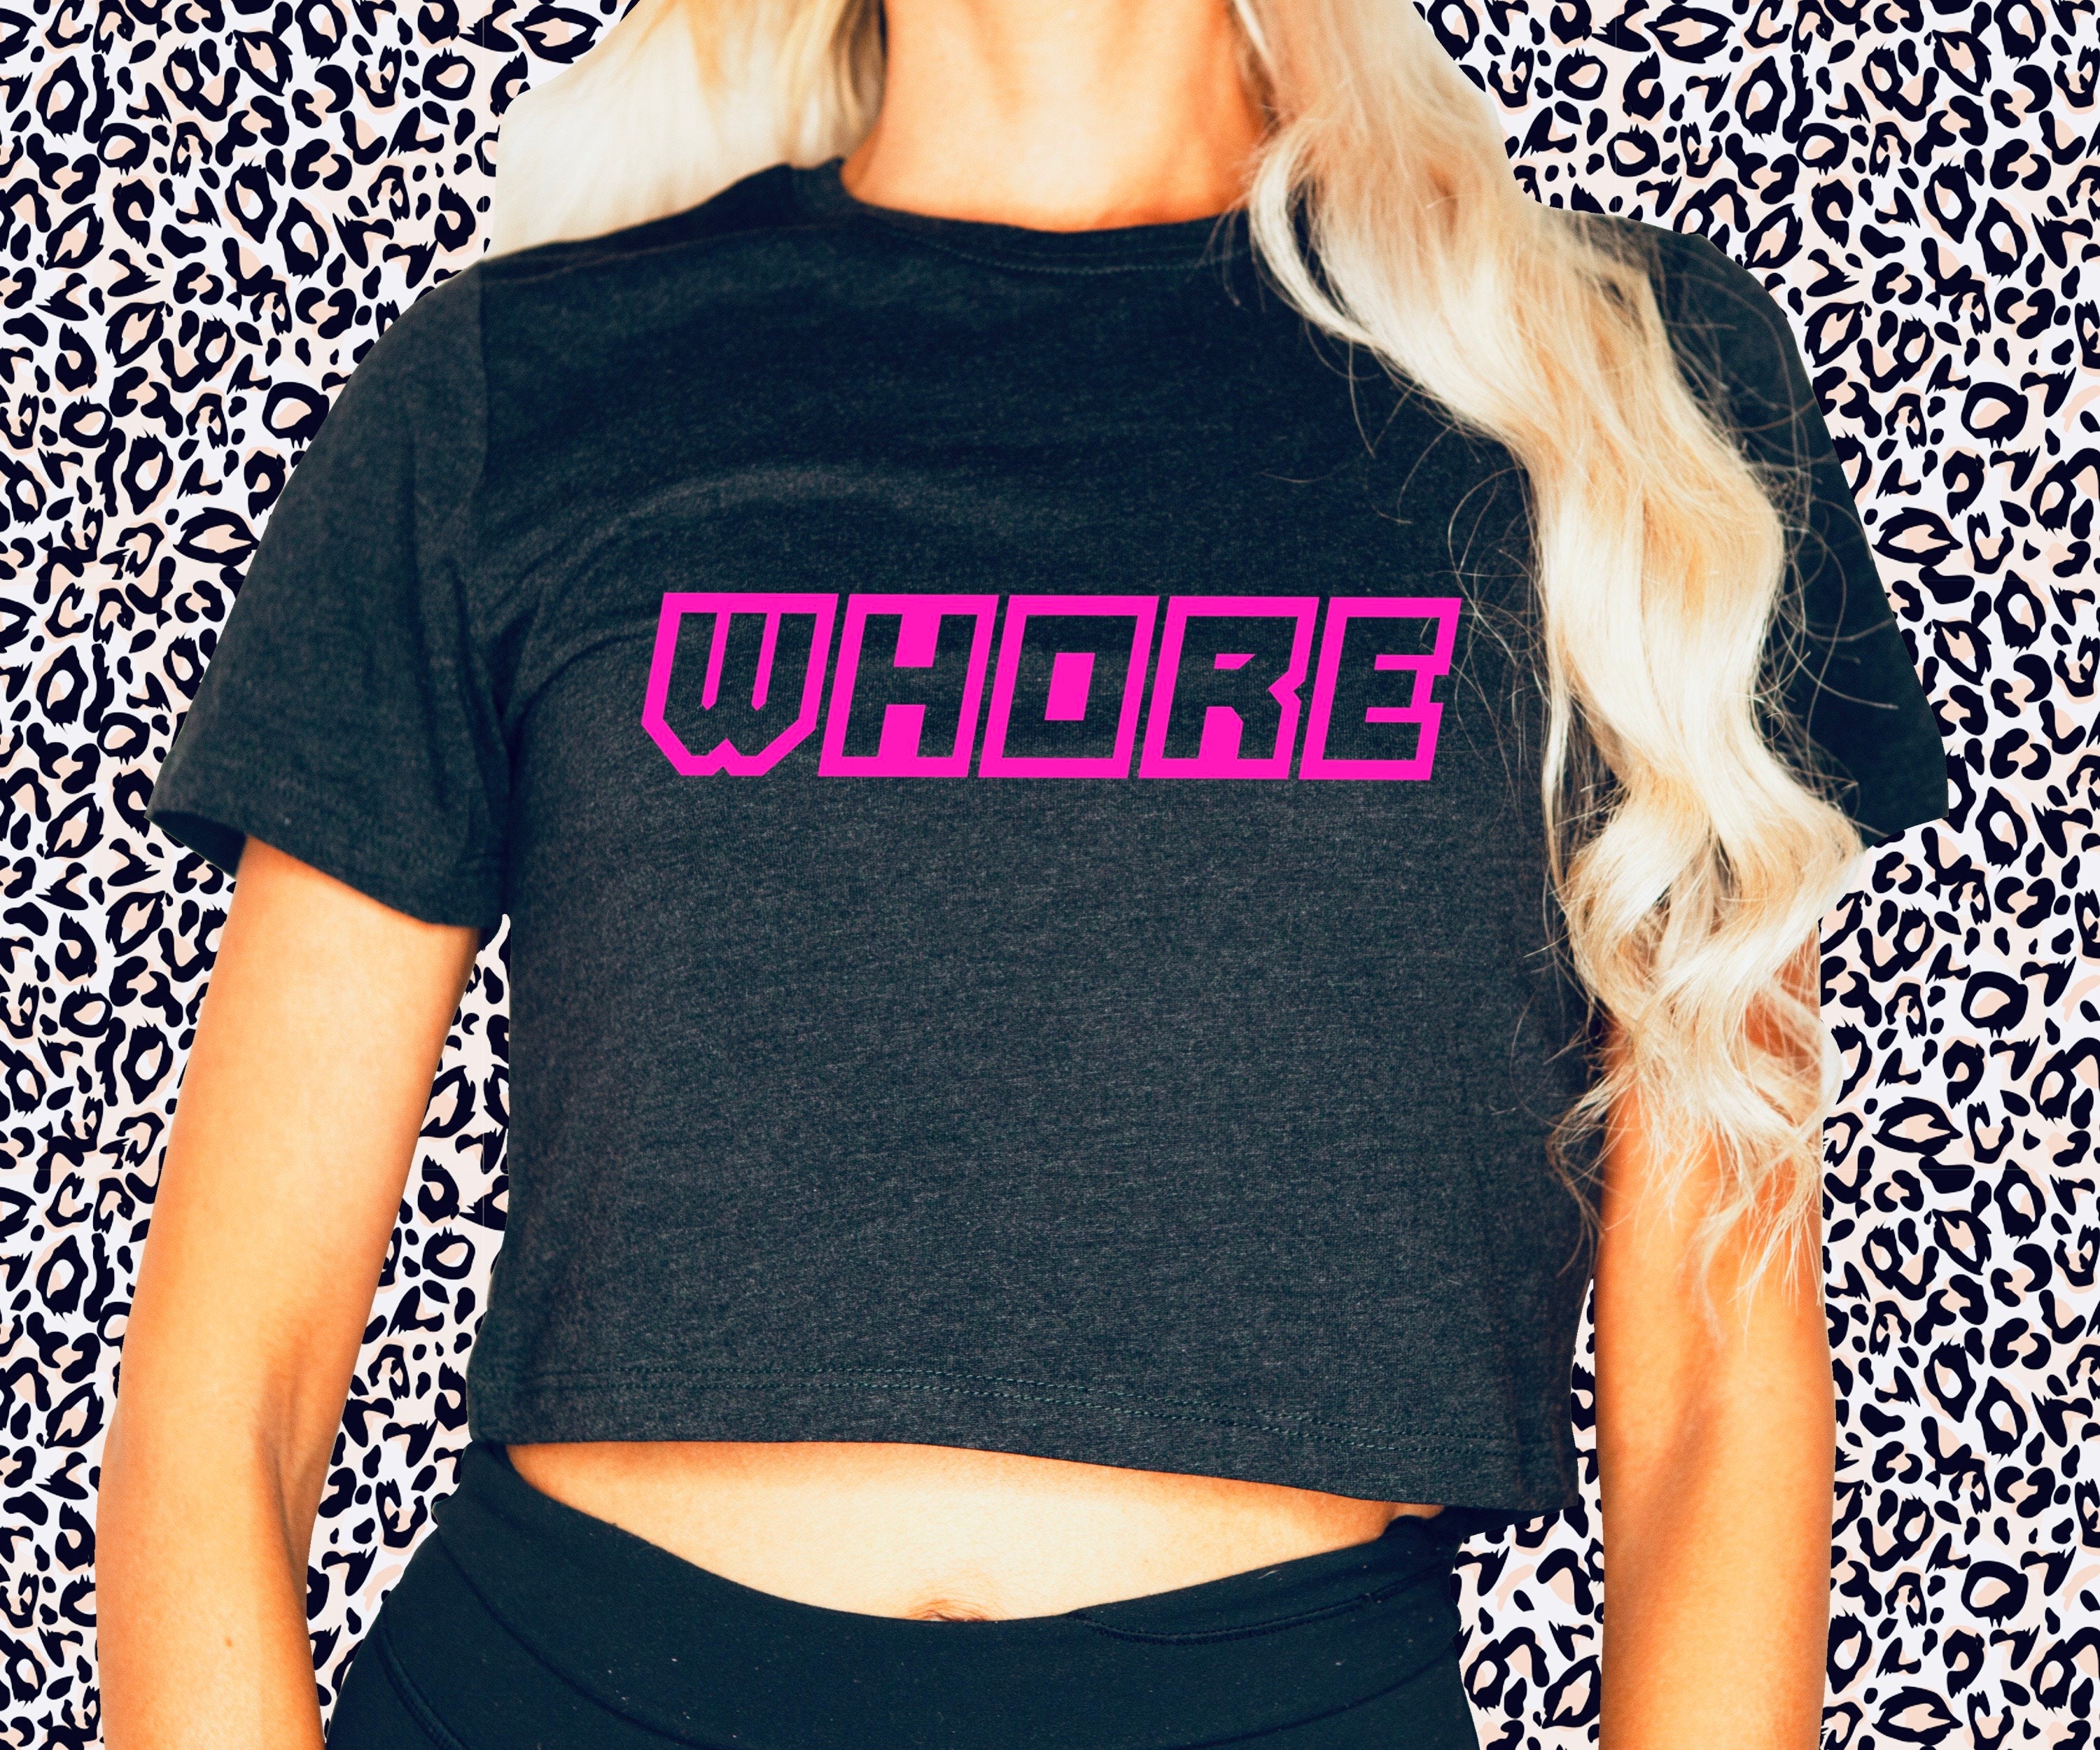 Whore Crop Top Sexy Pink DDLG Clothing BDSM Bimbo photo pic